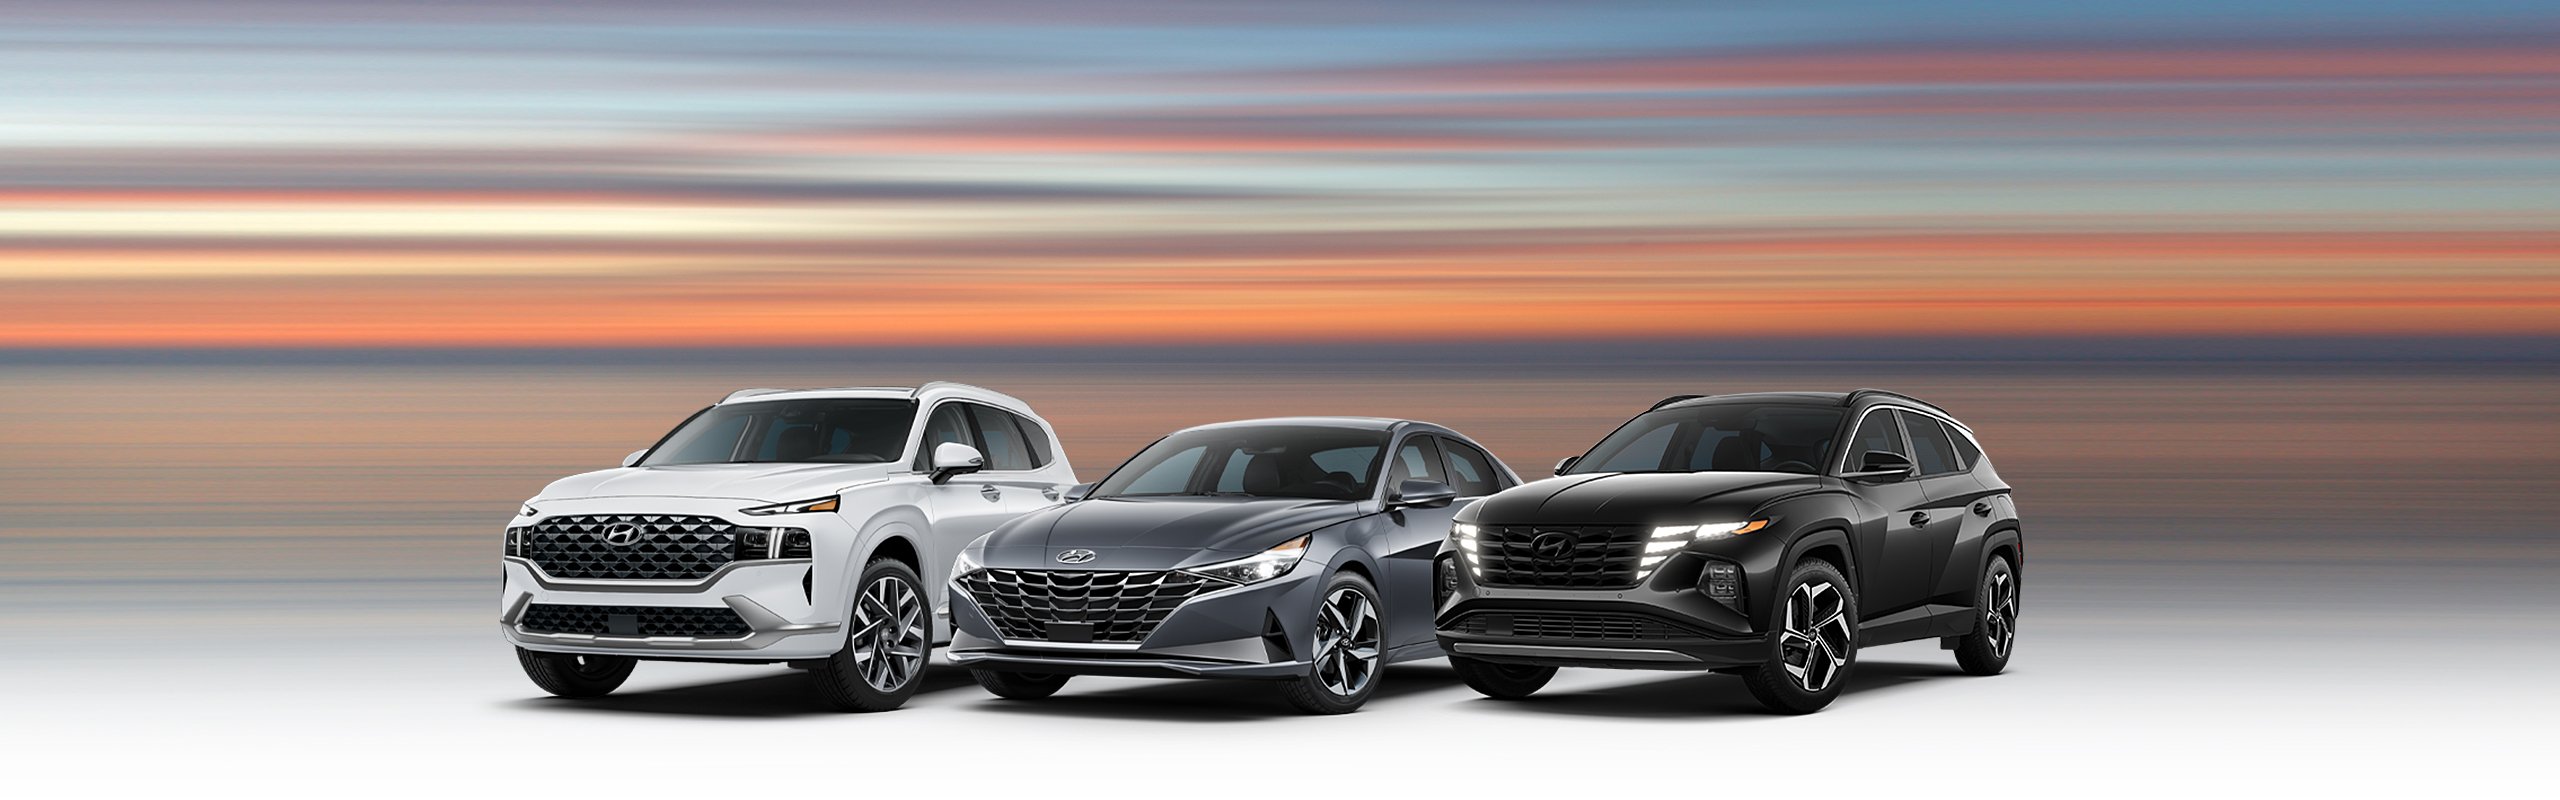 Hyundai Cars, Hyundai Sedans, Hyundai SUVs, Hyundai Compacts, and Hyundai Luxury Napleton's Valley Hyundai in Aurora